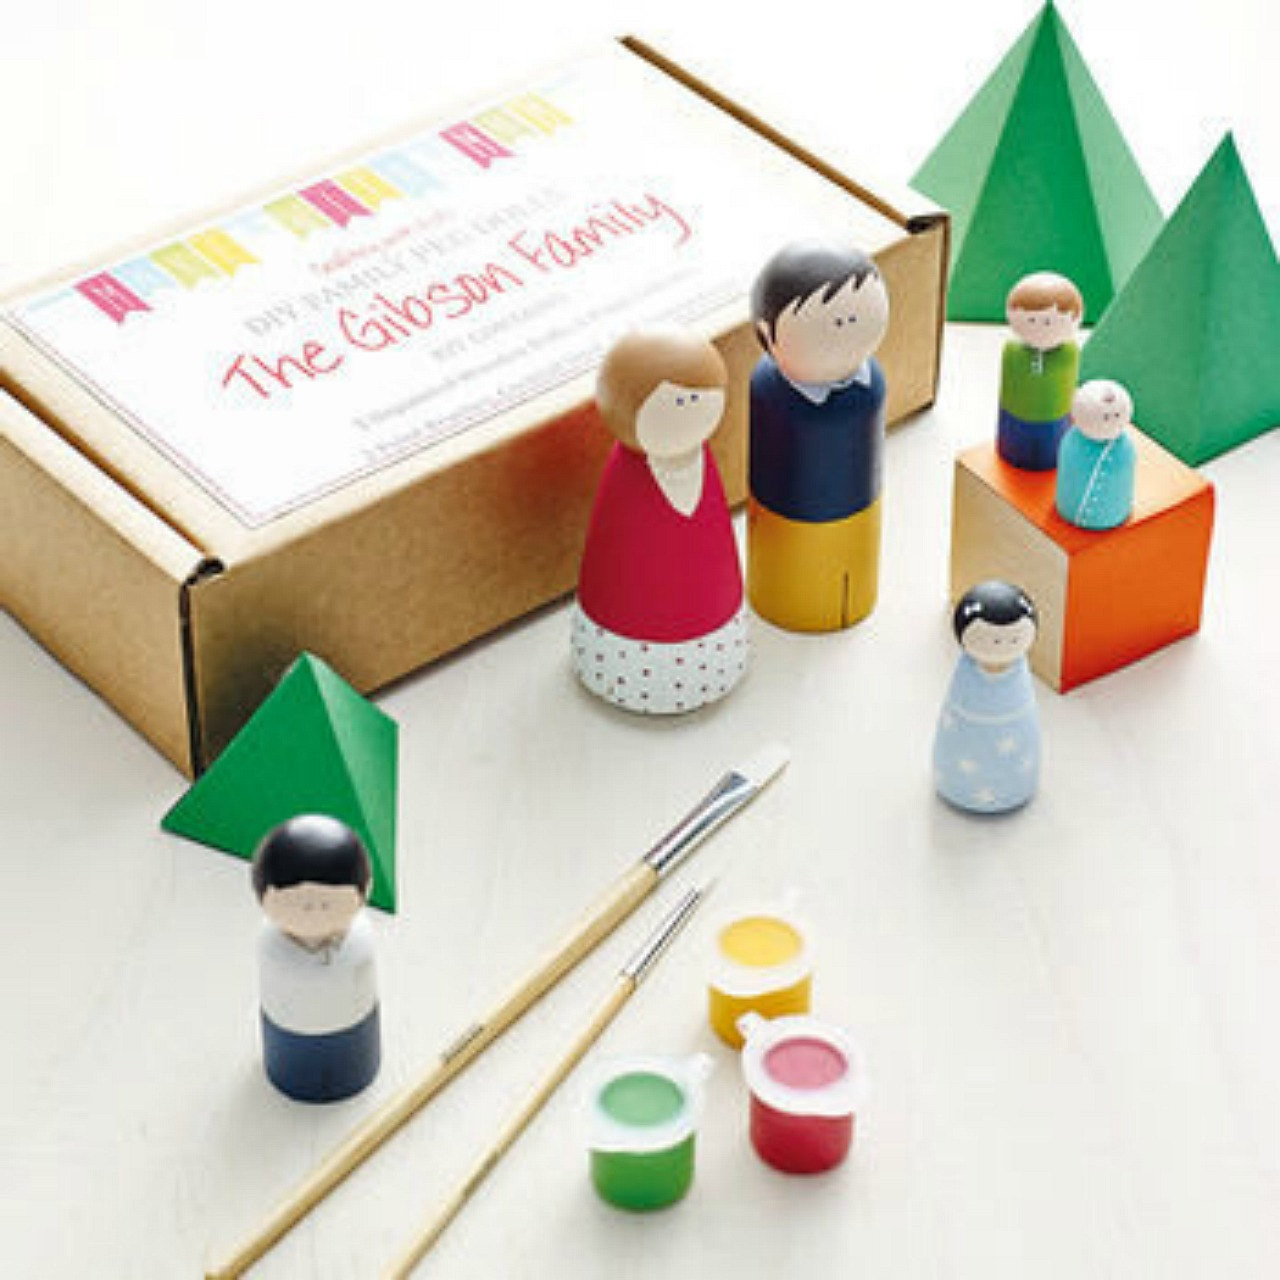 Diy Craft Kits For Kids
 Peg Doll Kit Family of 4 Wooden Dolls Kids Craft Kit DIY